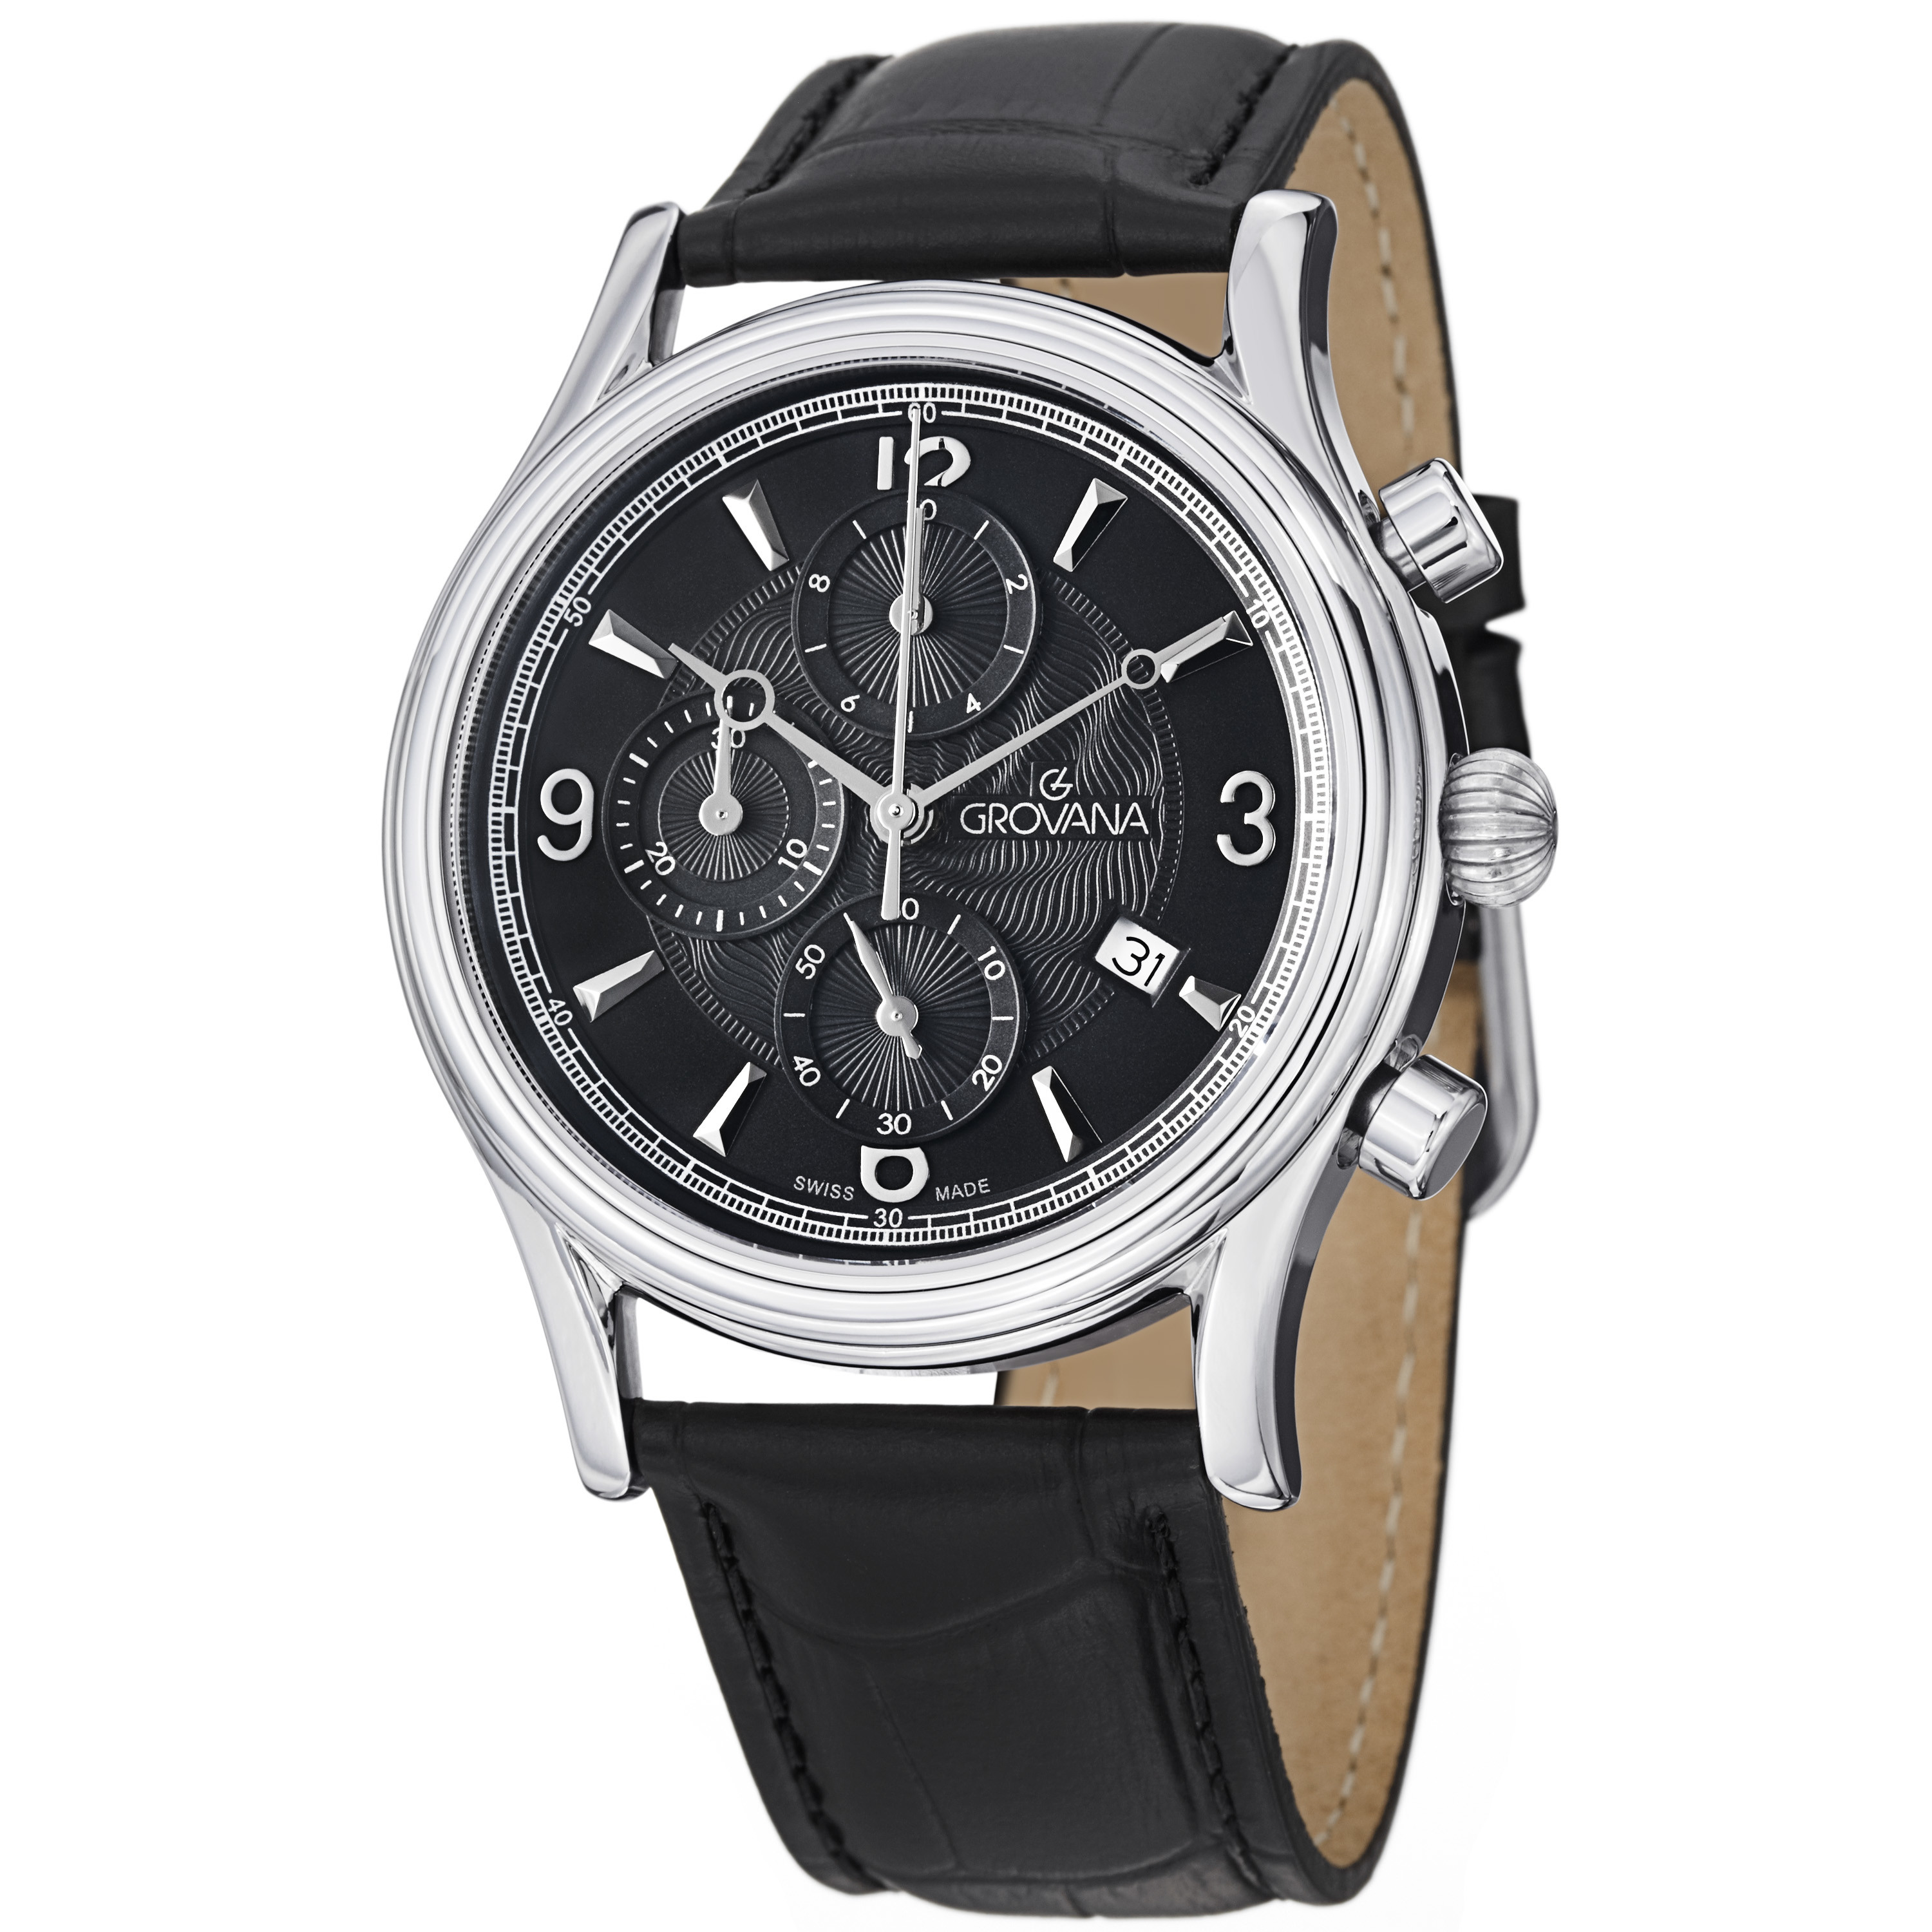 Grovana Chronograph Black Dial Black Leather Strap Men's Watch 1728.9537